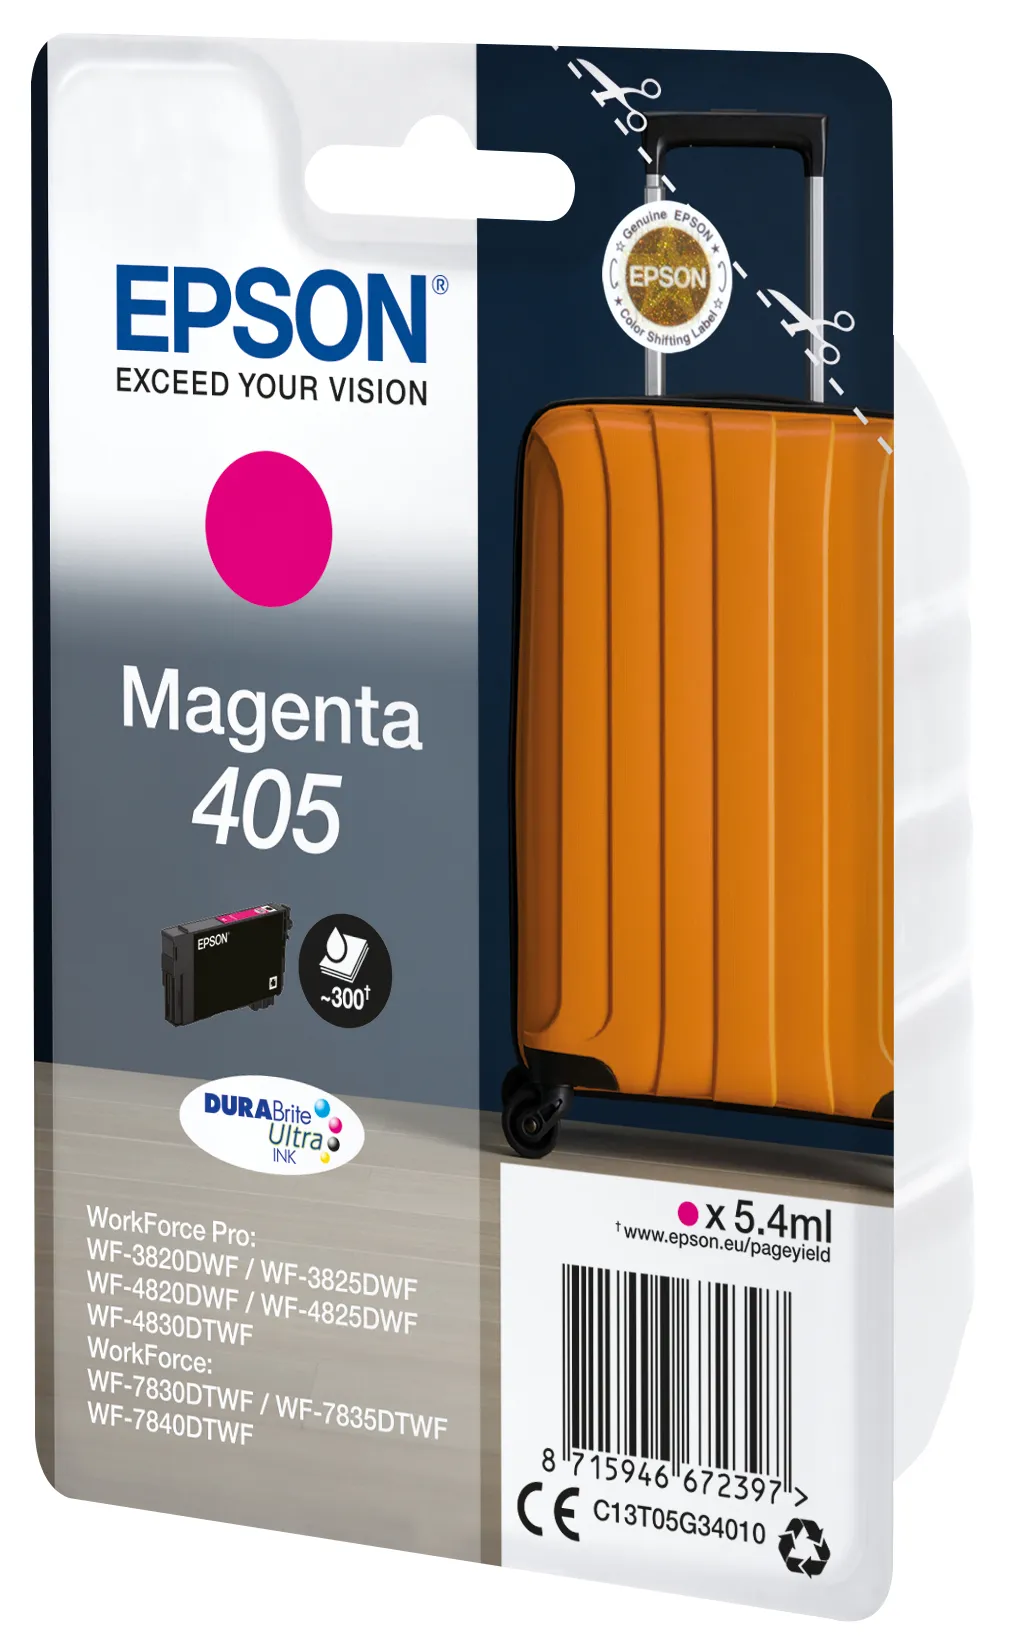 Vente EPSON Singlepack Magenta 405 DURABrite Ultra Ink Epson au meilleur prix - visuel 4